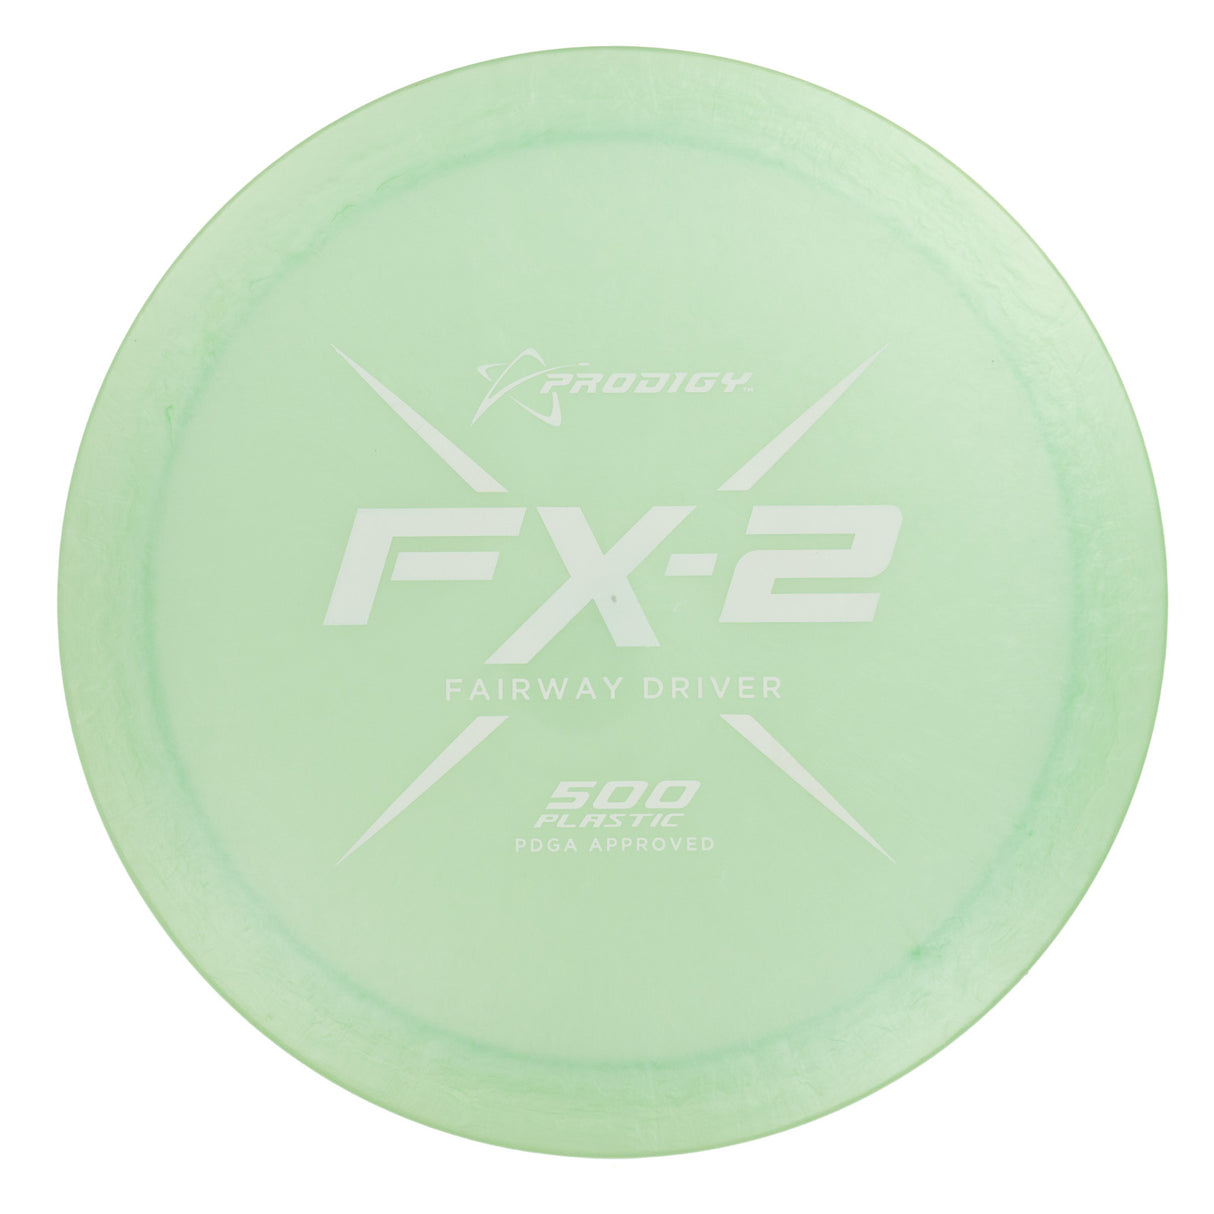 Prodigy FX-2 - 500 174g | Style 0002